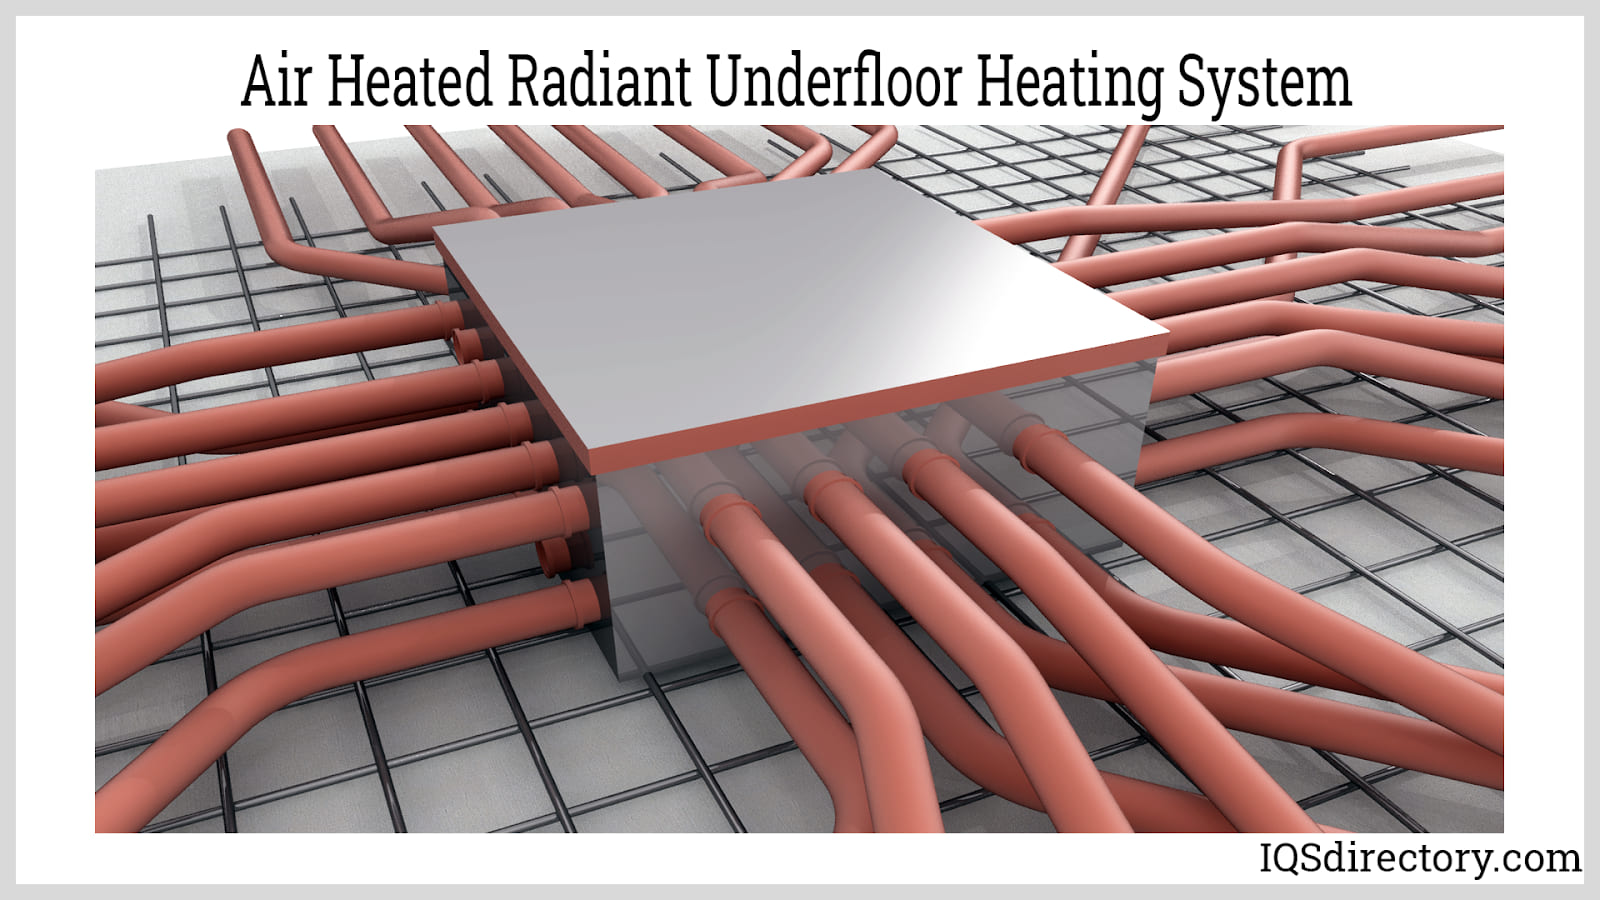 Air Heated Radiant Underfloor Heating System